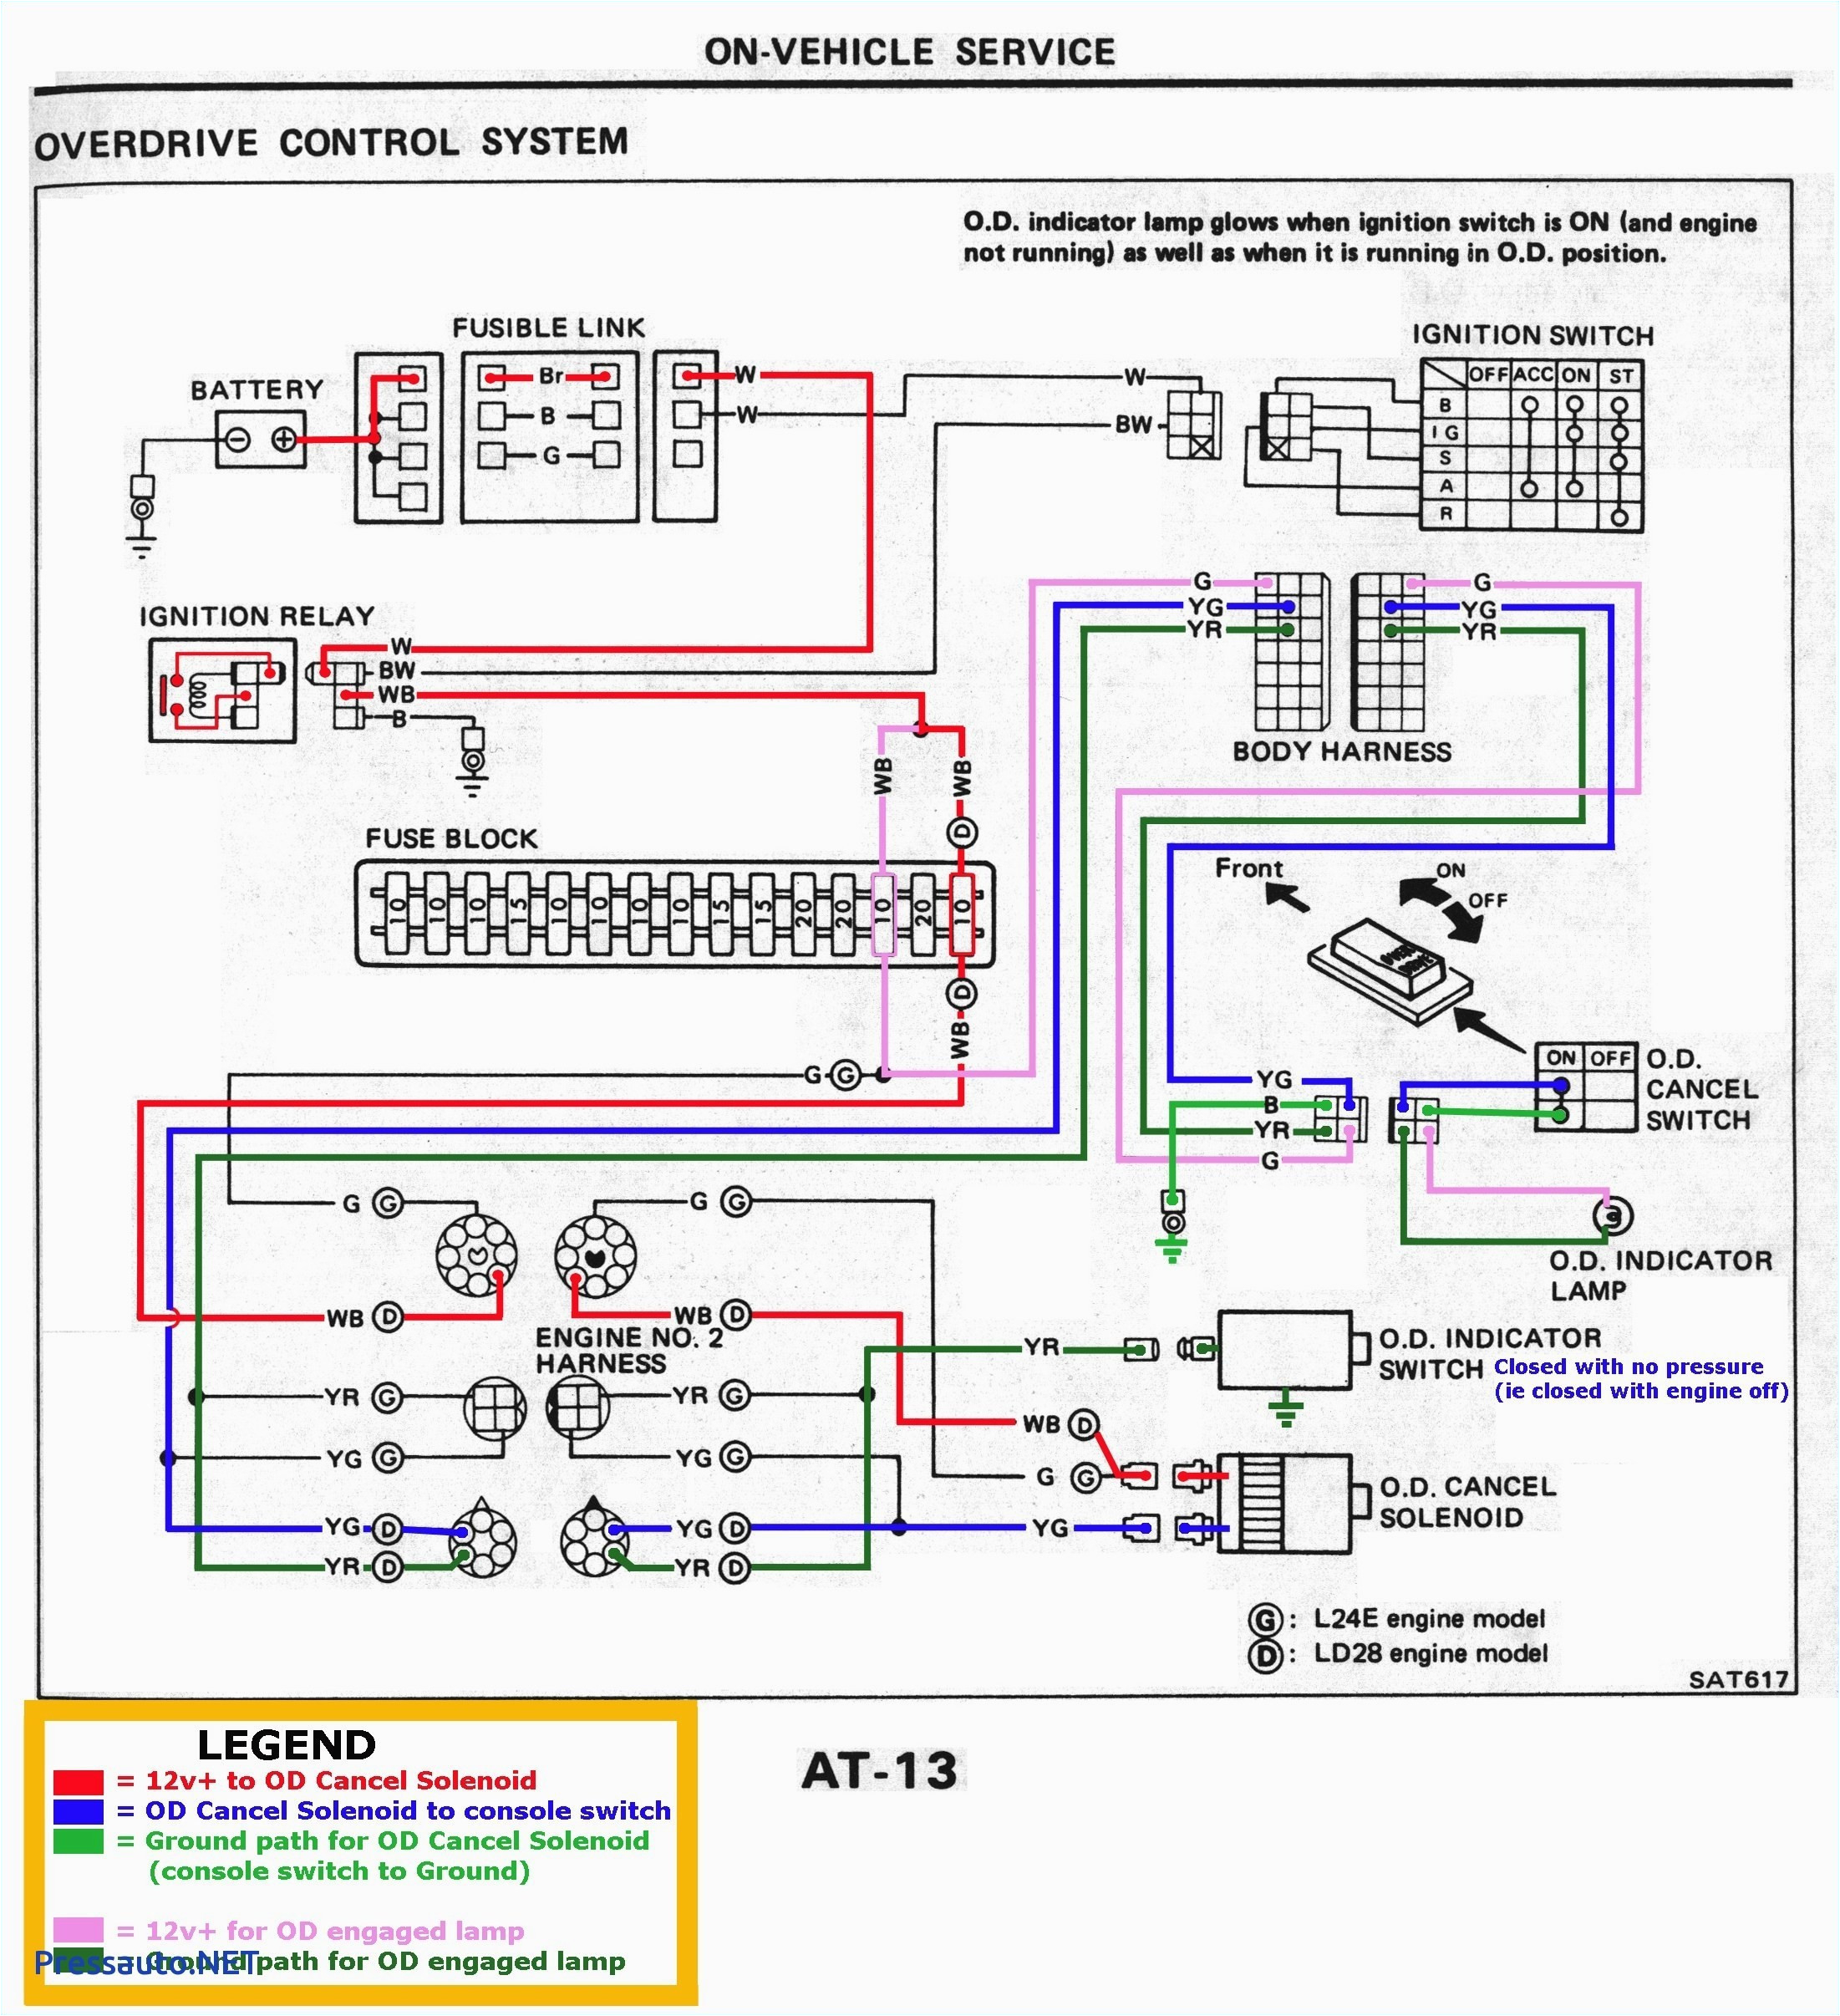 ae86 wiring diagram wiring diagram expert ae86 wiring diagram cooling fan